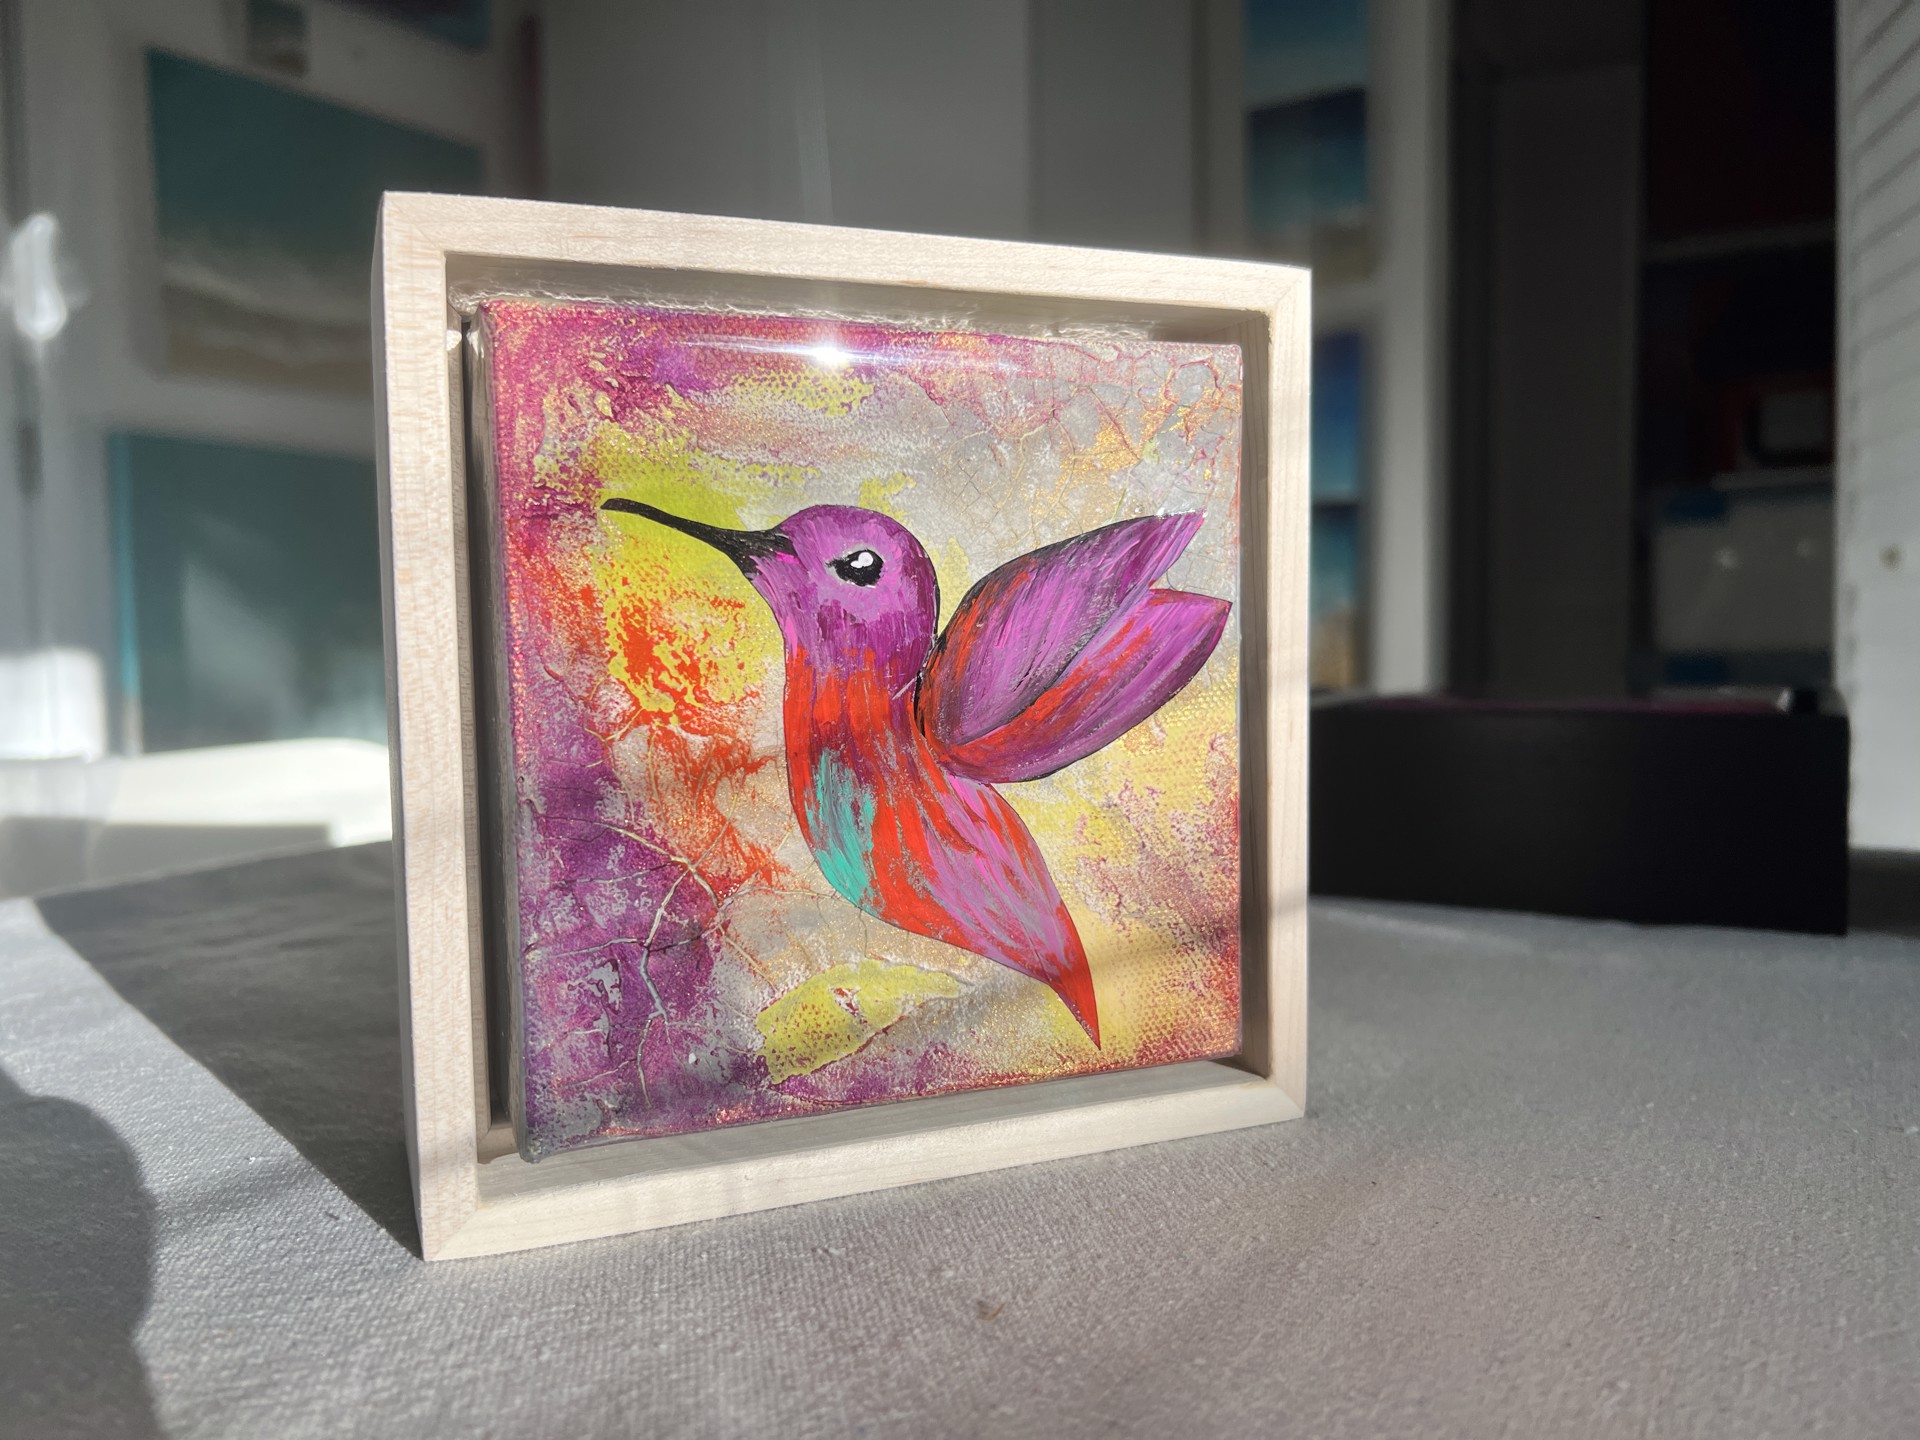 Hummingbird #6 by Ana Hefco